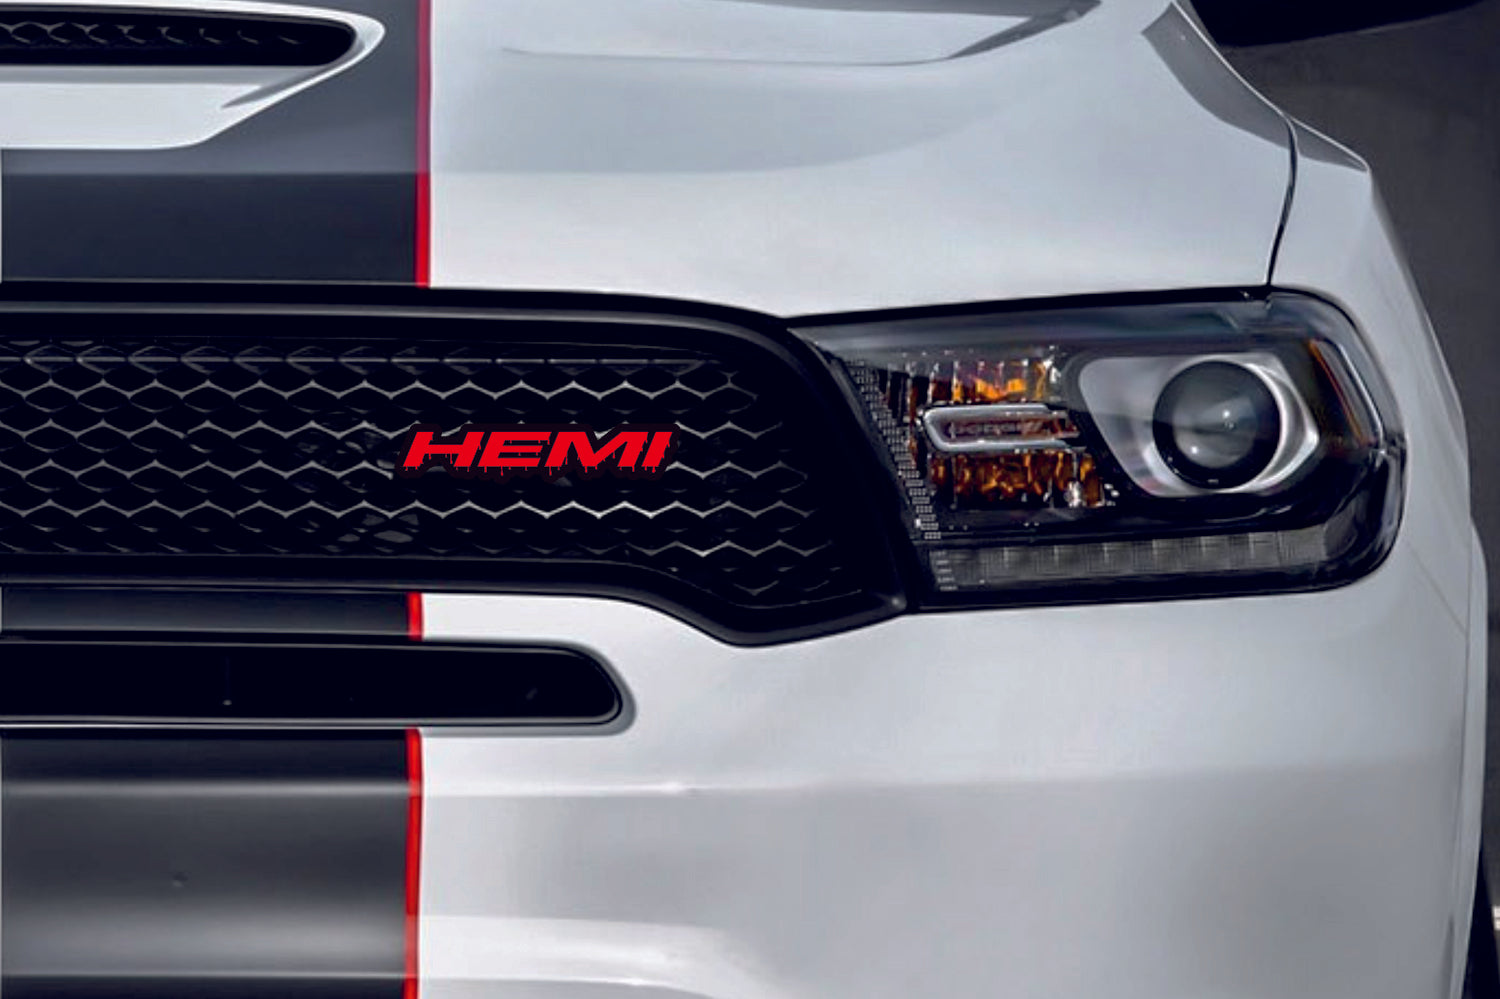 Chrysler Radiator grille emblem with HEMI BLOOD logo - decoinfabric